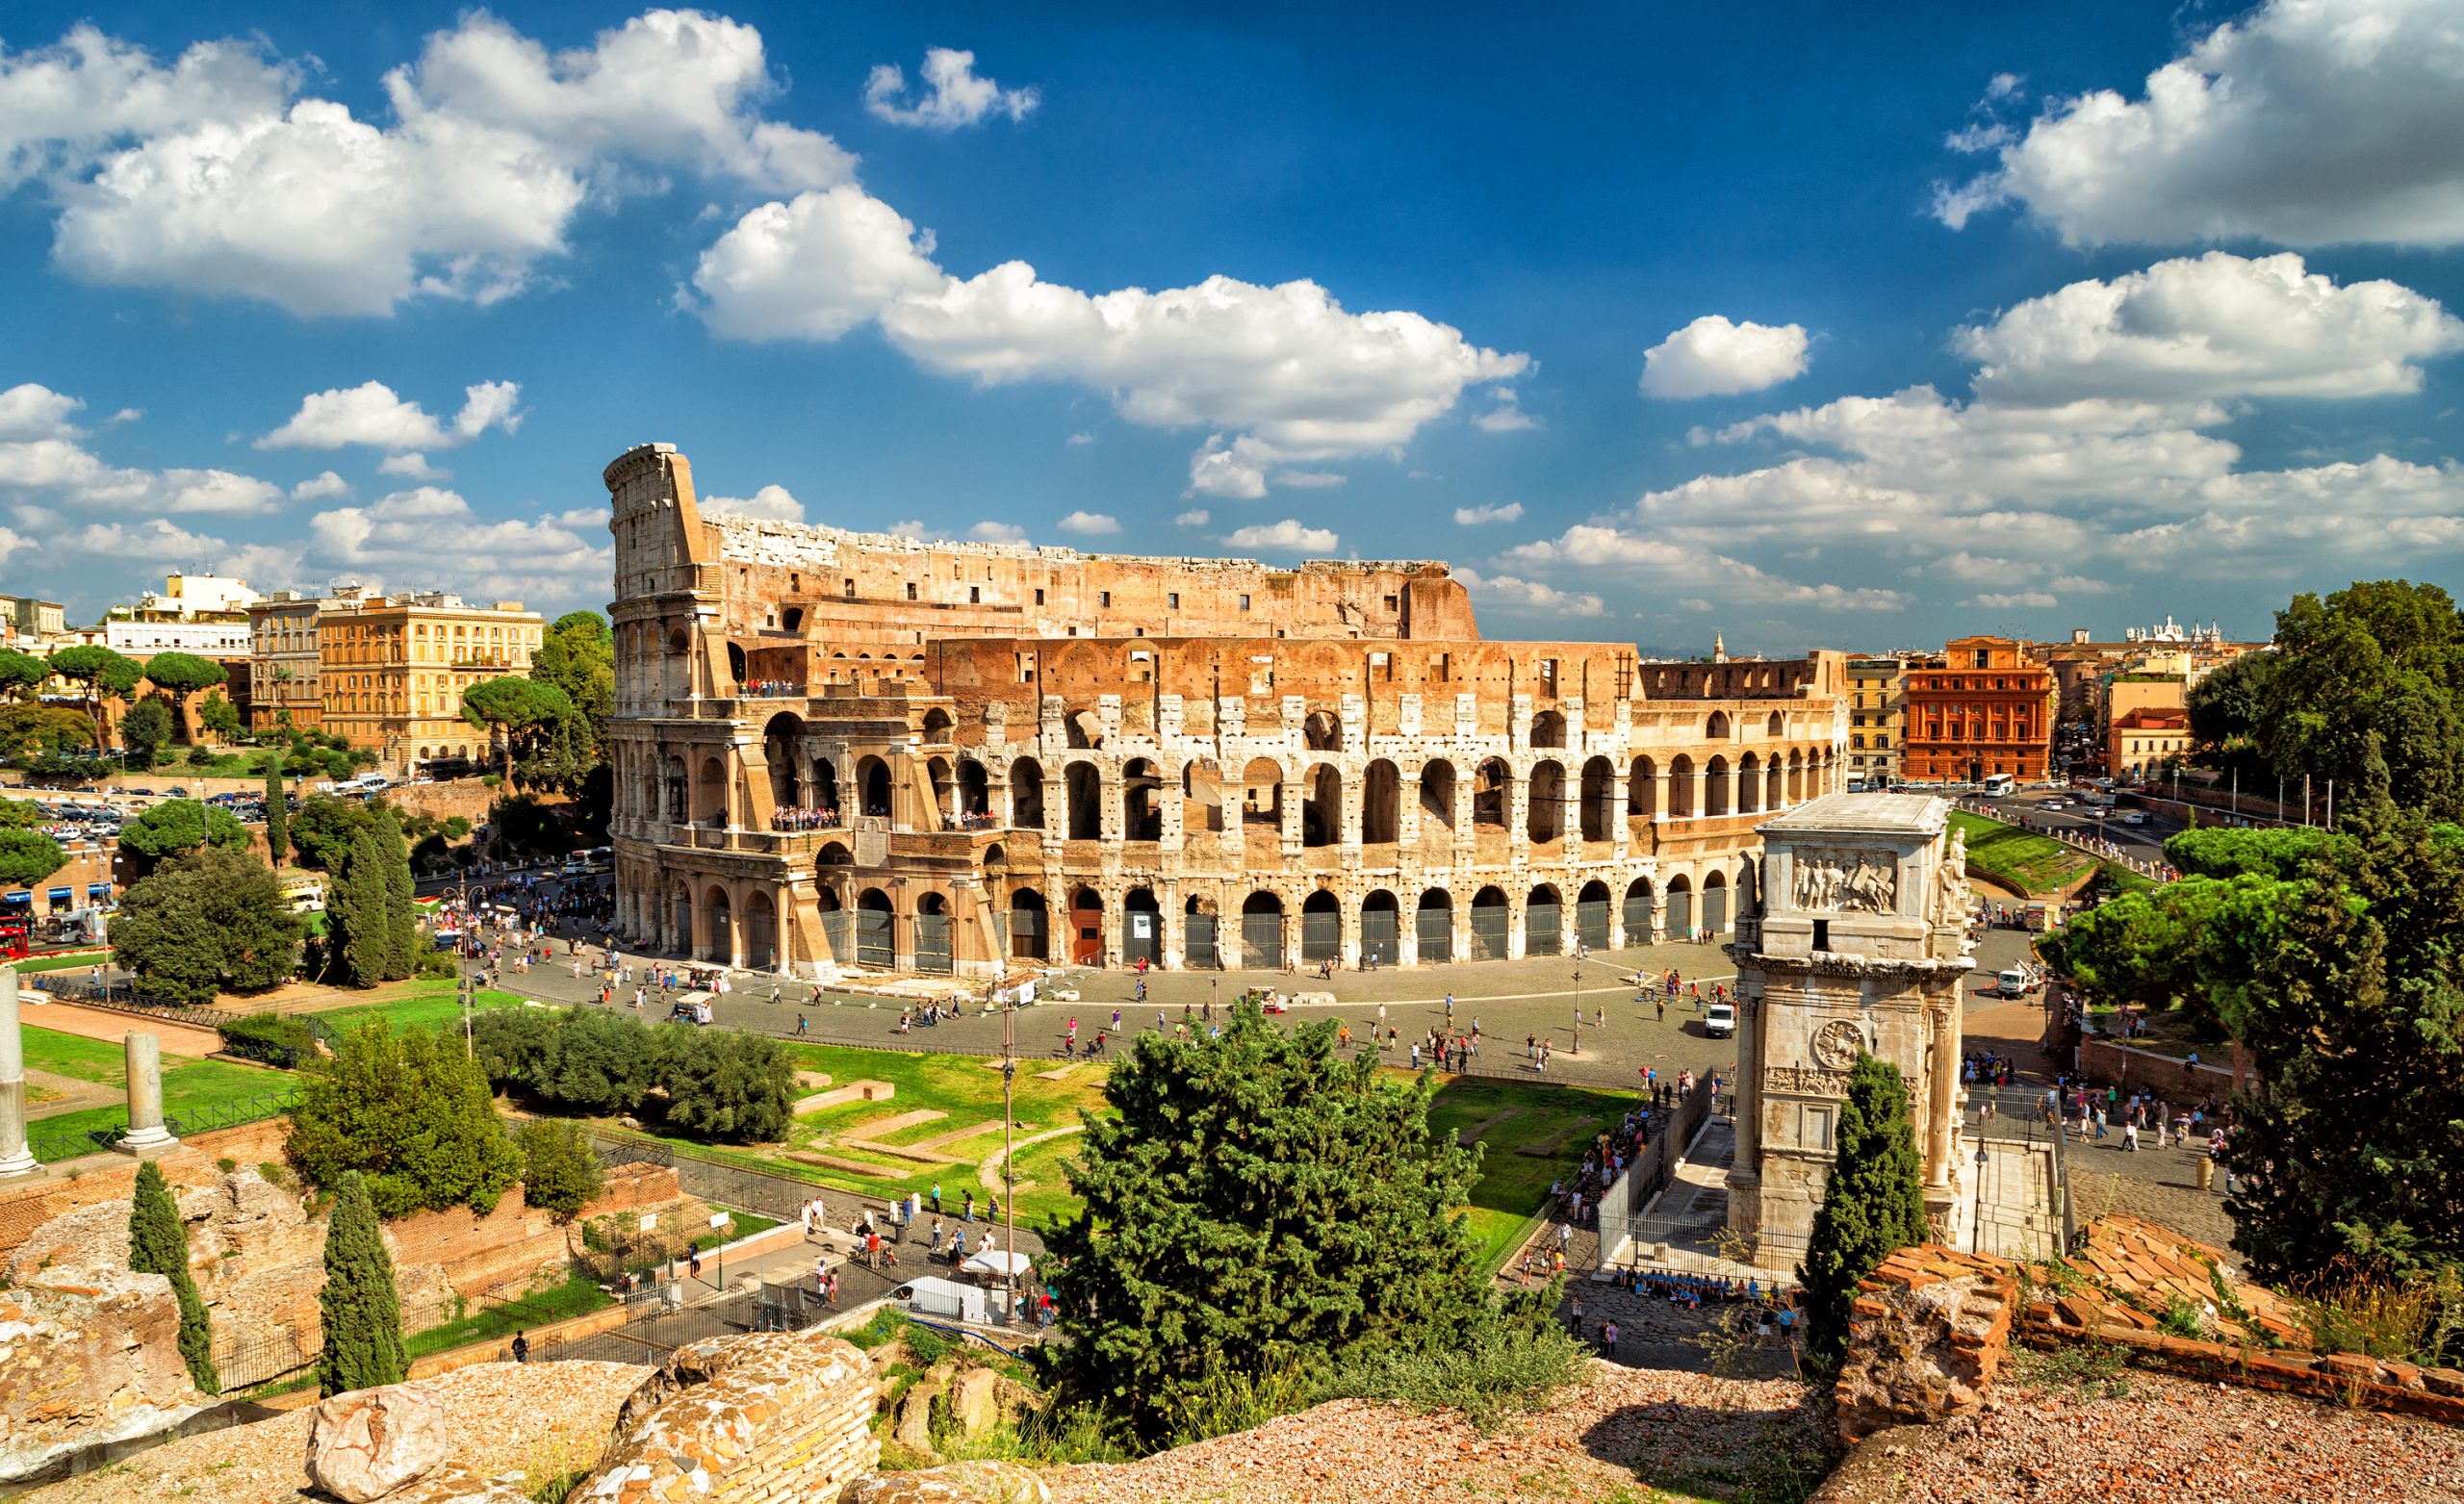 Colosseum_Ancient Rome (3)